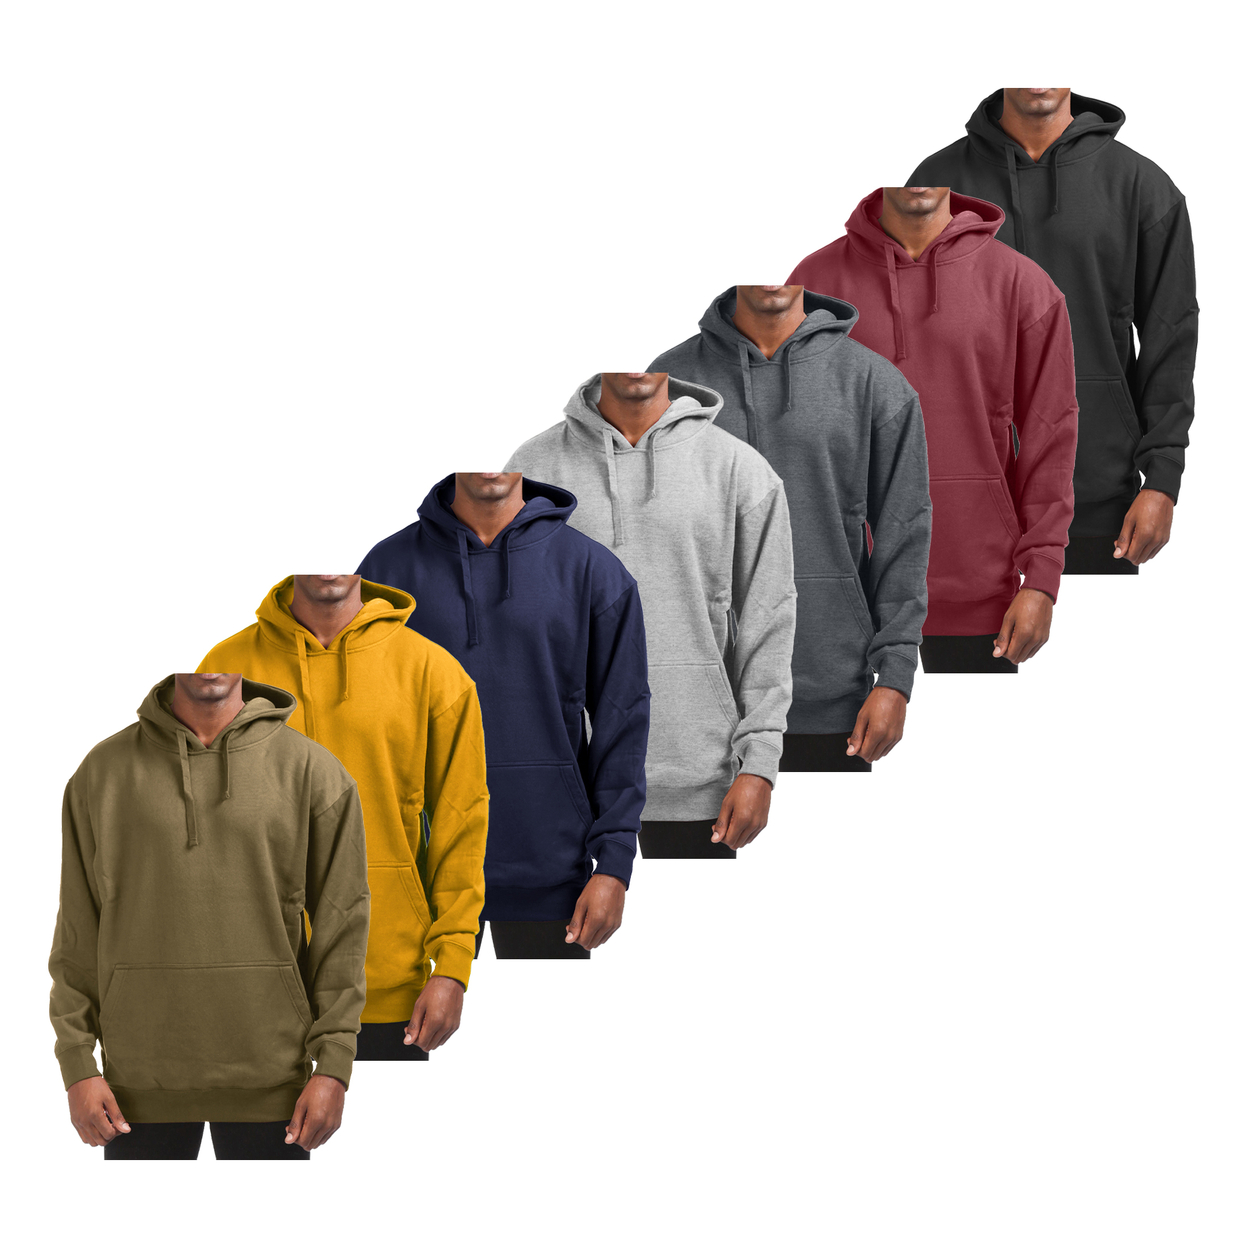 2-Pack: Men's Super-Soft Winter Warm Cotton-Blend Fleece Pullover Hoodie With Kangaroo Pocket - Black & Grey, Medium